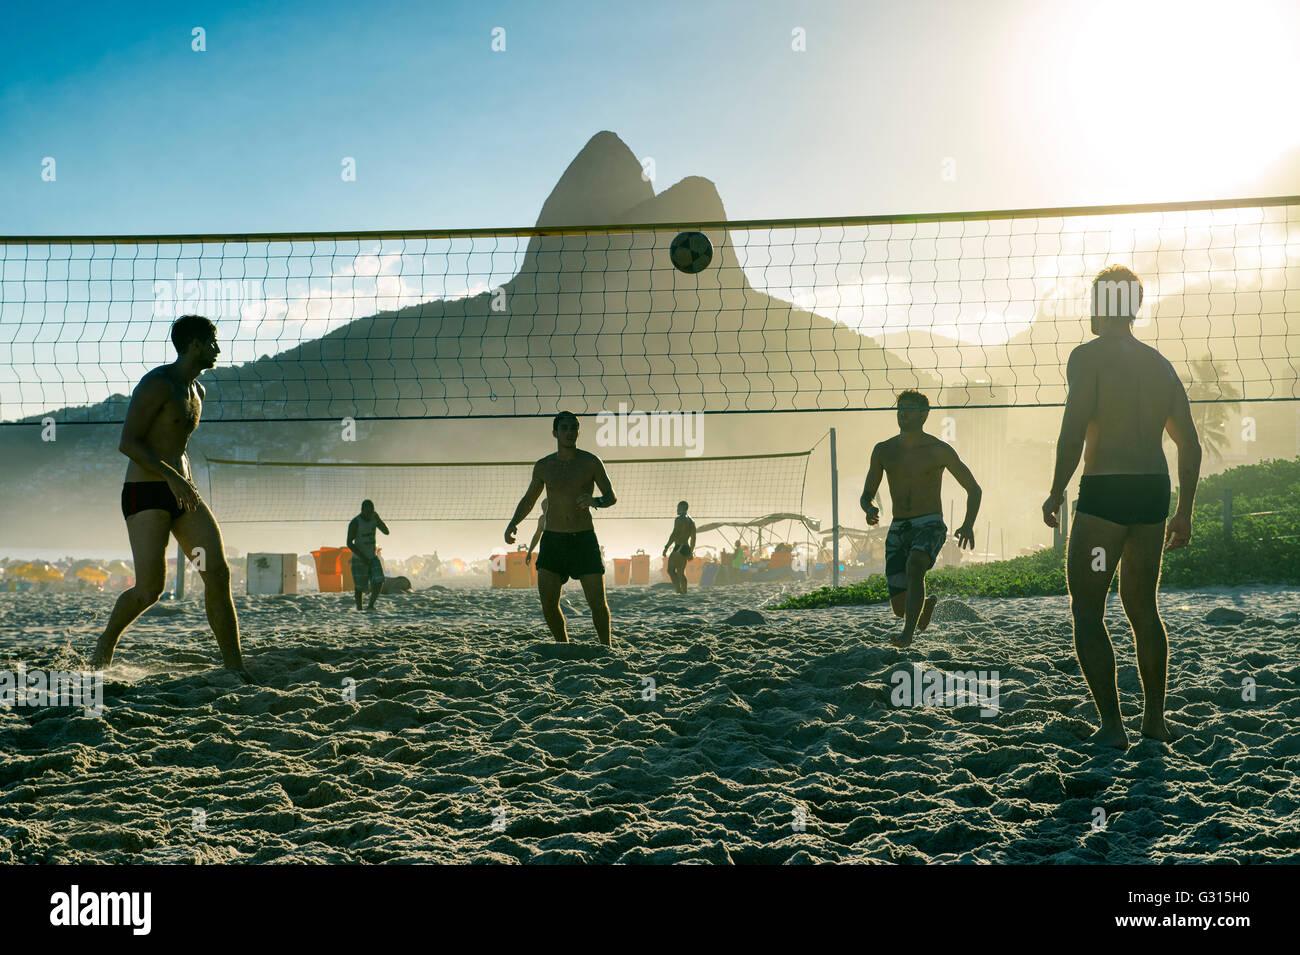 RIO DE JANEIRO - MARCH 27, 2016: Brazilians play beach futevôlei (footvolley, a sport combining football/soccer and volleyball). Stock Photo